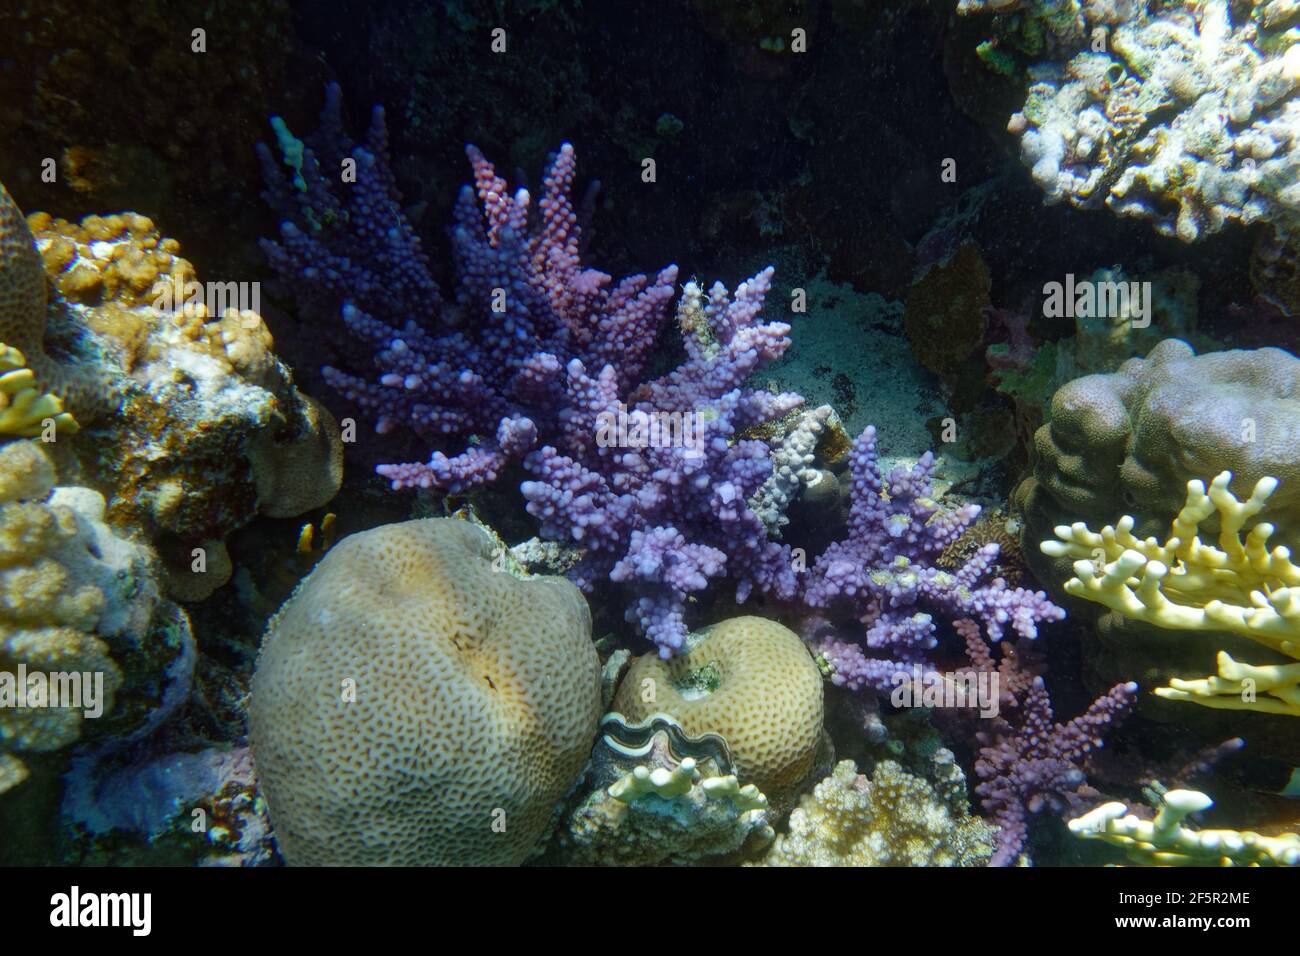 Stony coral (Acropora austera) in Red Sea Stock Photo